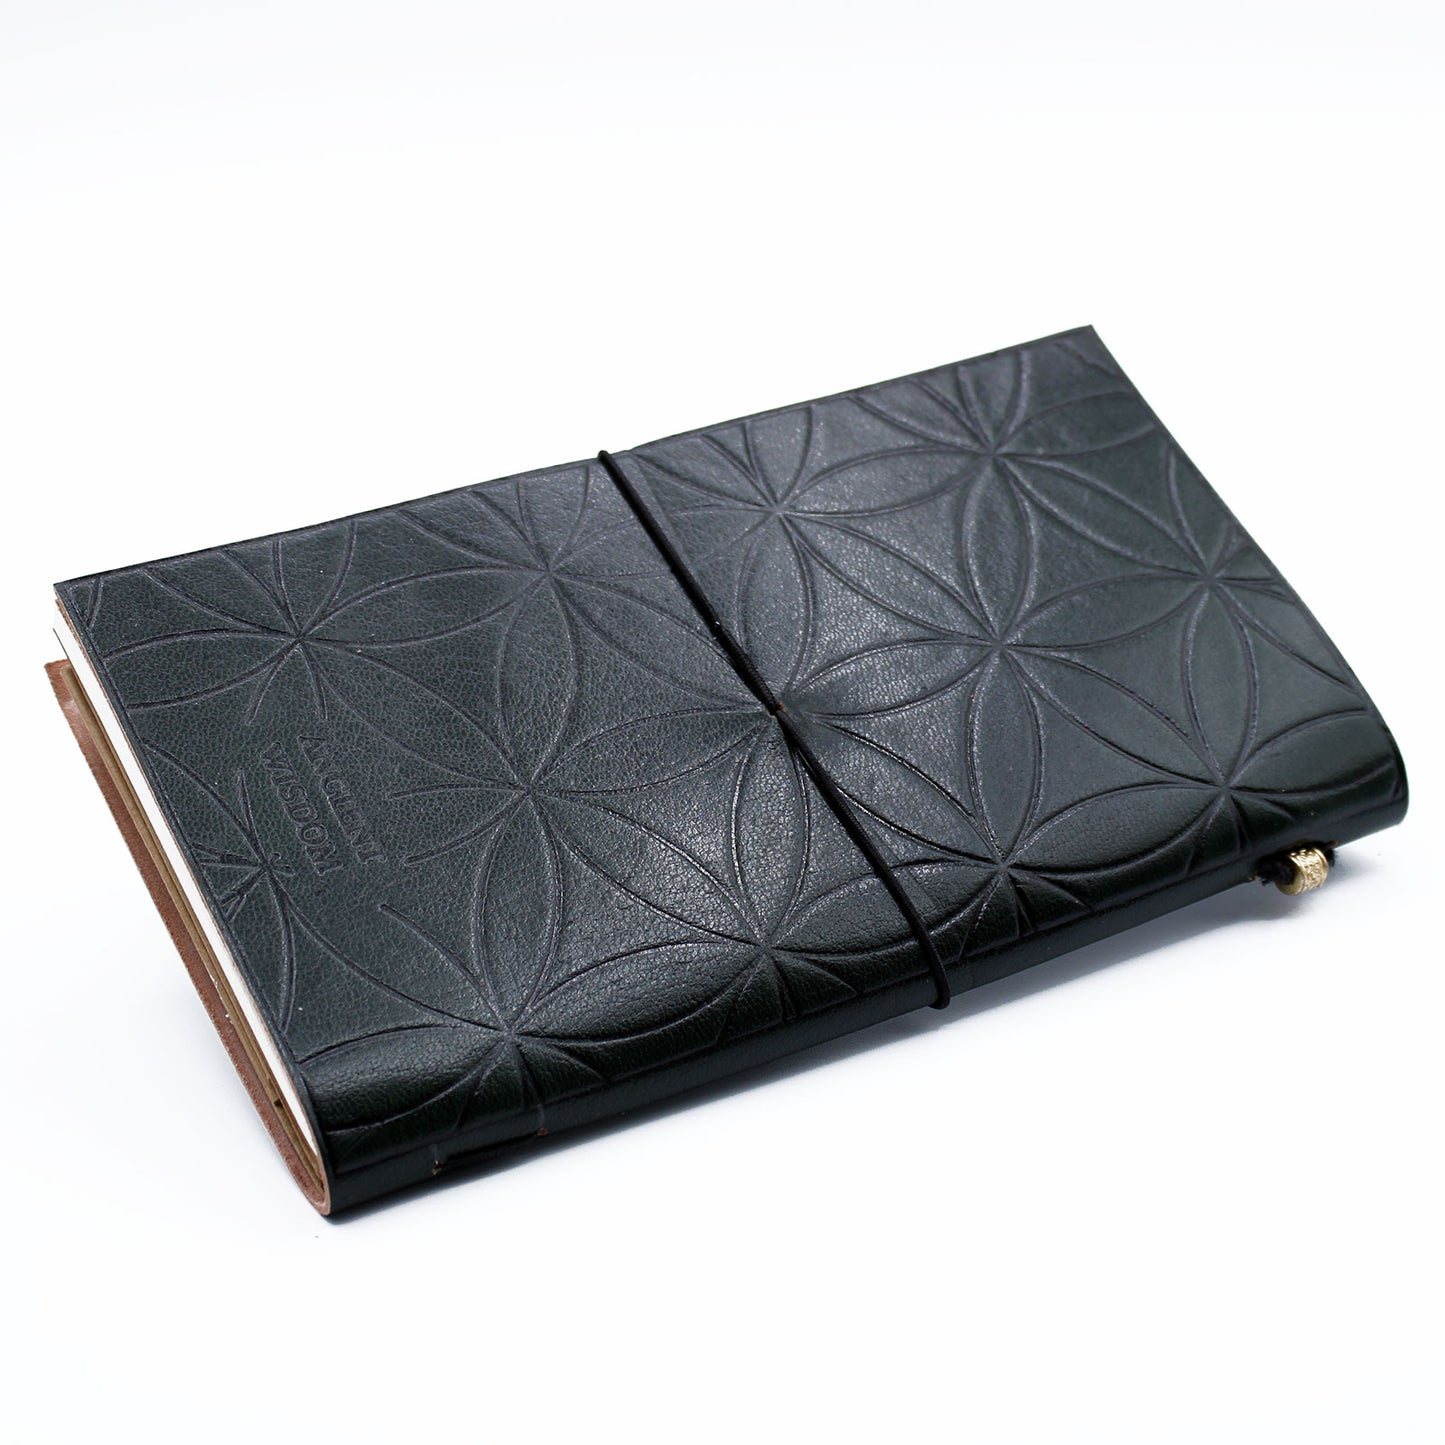 Handmade Leather Journal - Flower of Life - Green